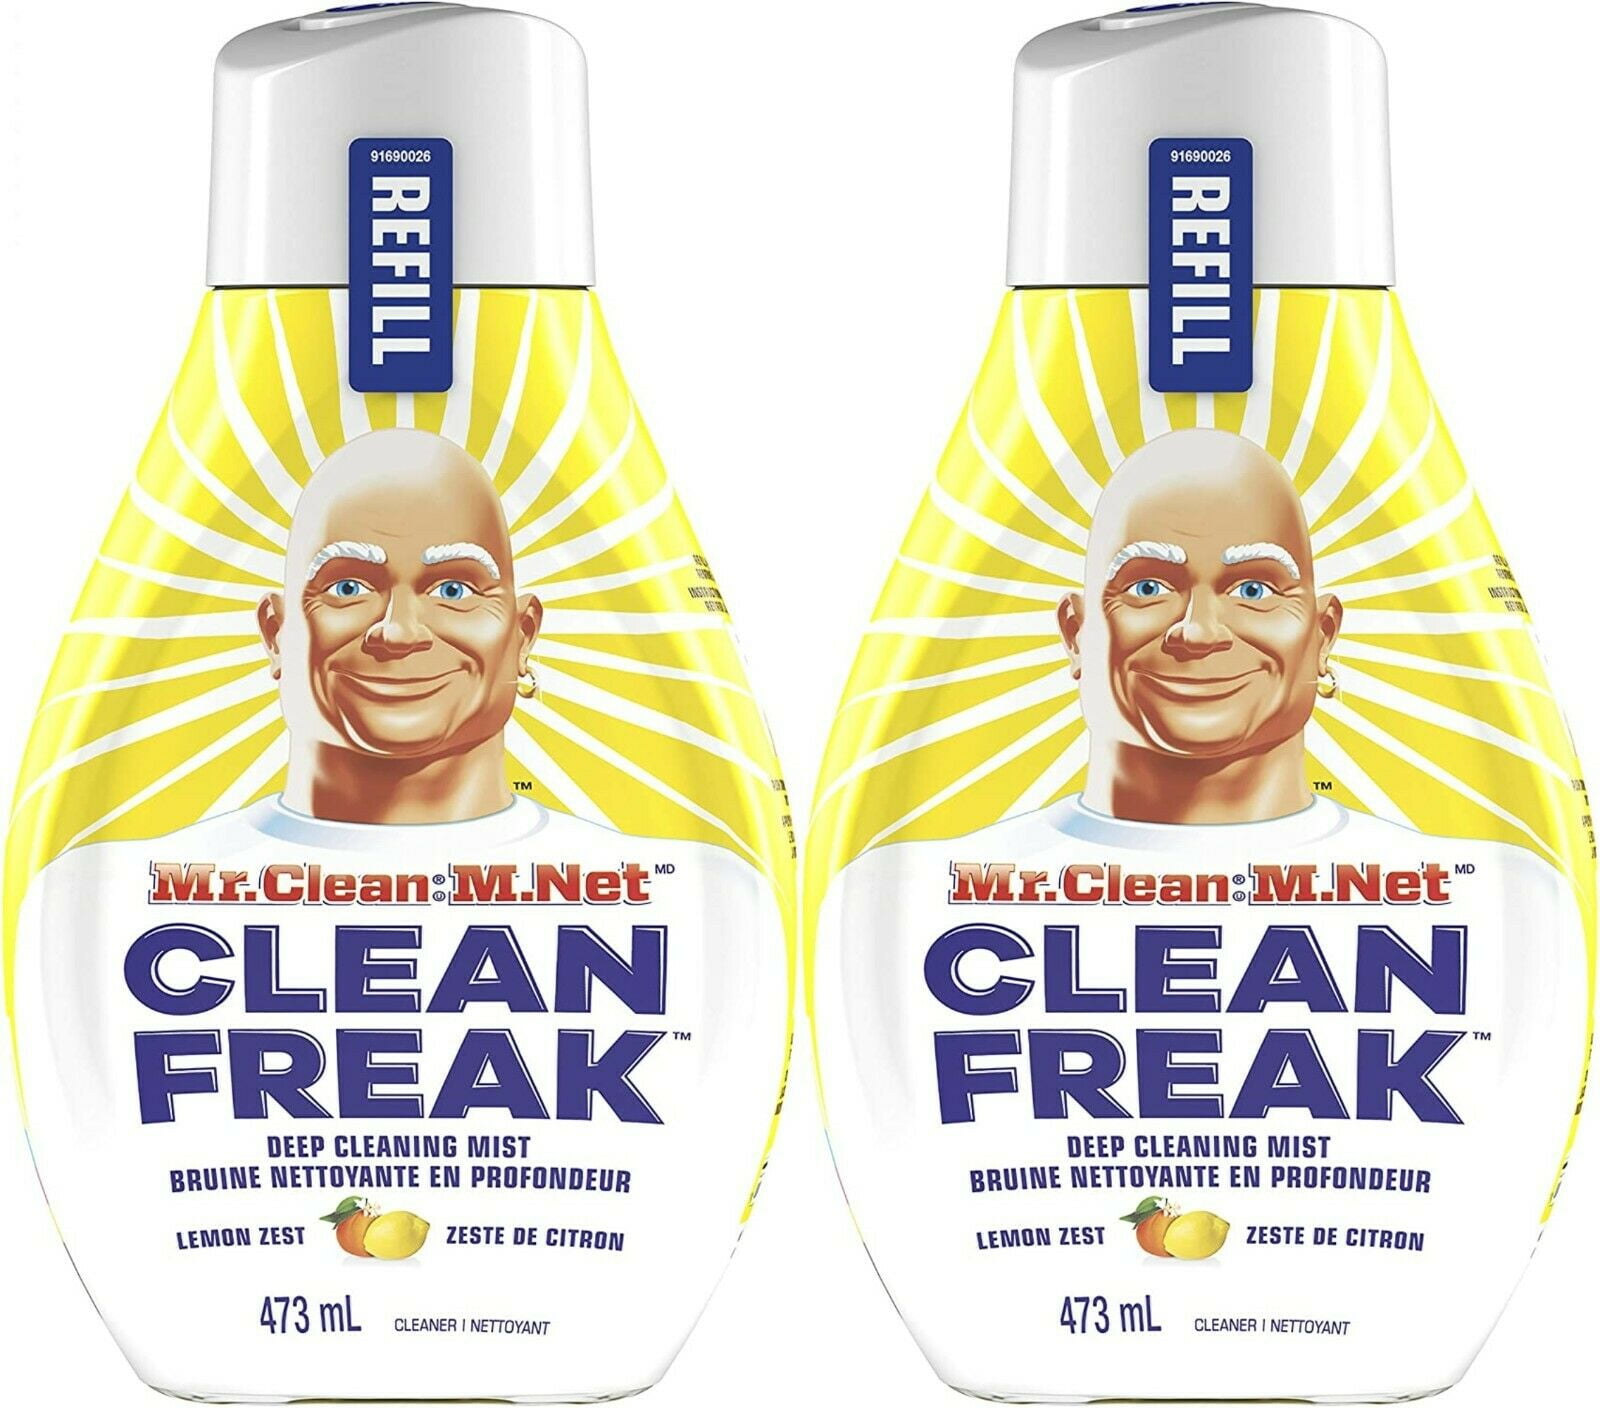 Mr. Clean, Clean Freak Deep Cleaning Mist Multi-Surface Spray + Refill Lemon Zest (62.9 fl. oz. Total)